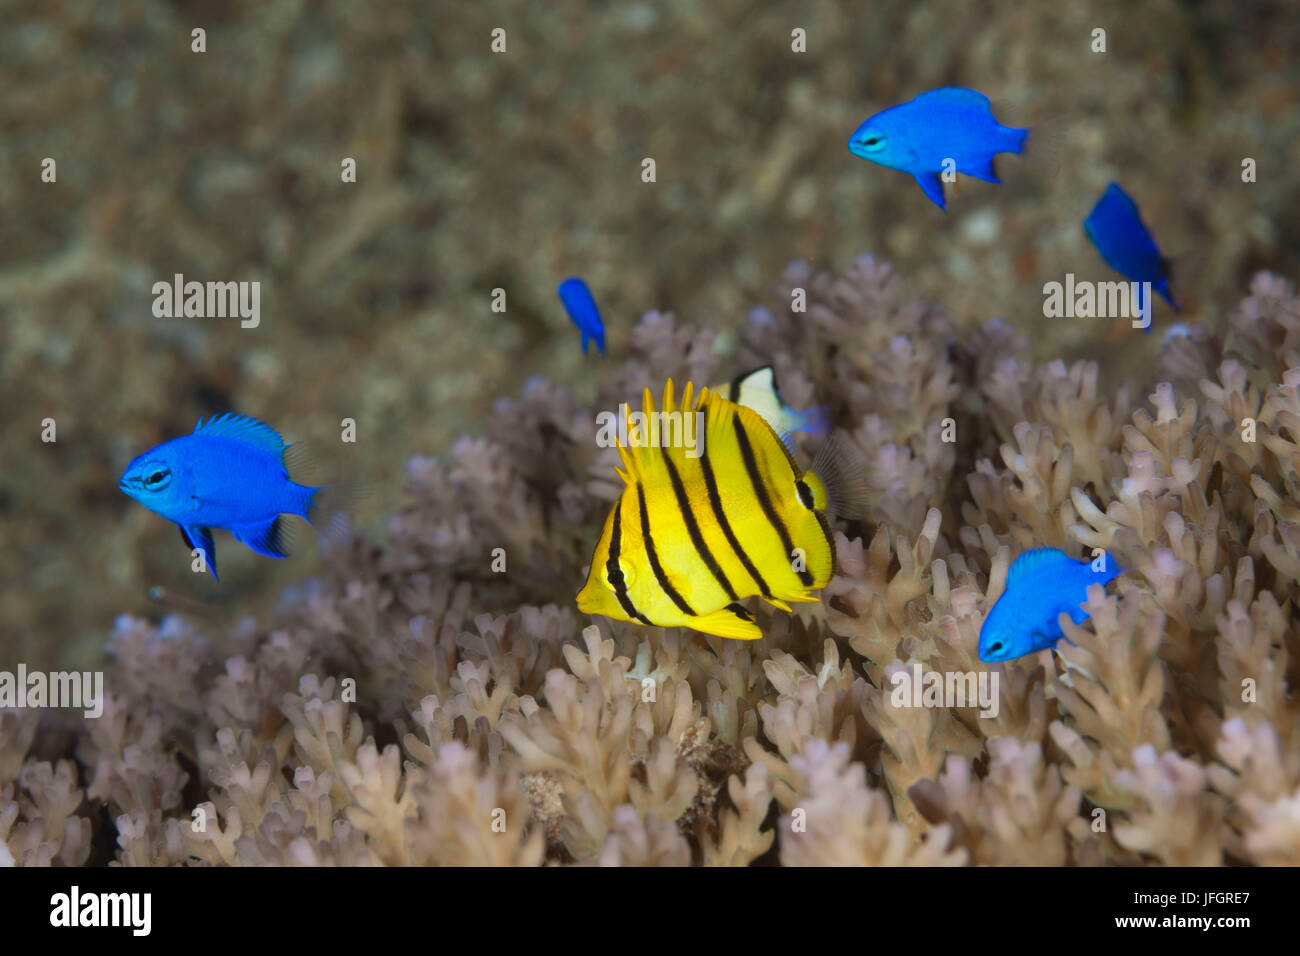 Juveniler 8 chapelage butterfly's fish and blue Saphir-Demoisellen, Chaetodon octofasciatus, Chrysiptera cyanea, Russell islands, the Solomon Islands Stock Photo